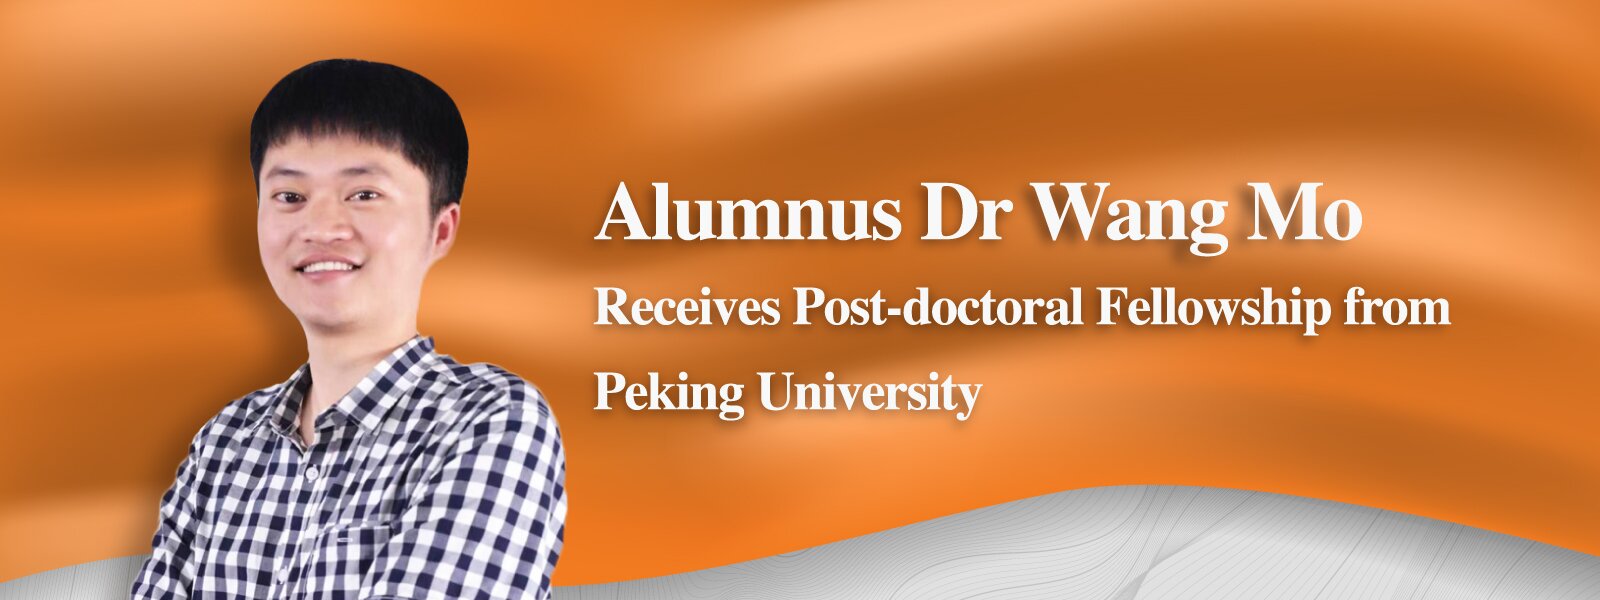 Alumnus Dr Wang Mo Receives Post-doctoral Fellowship from Peking University